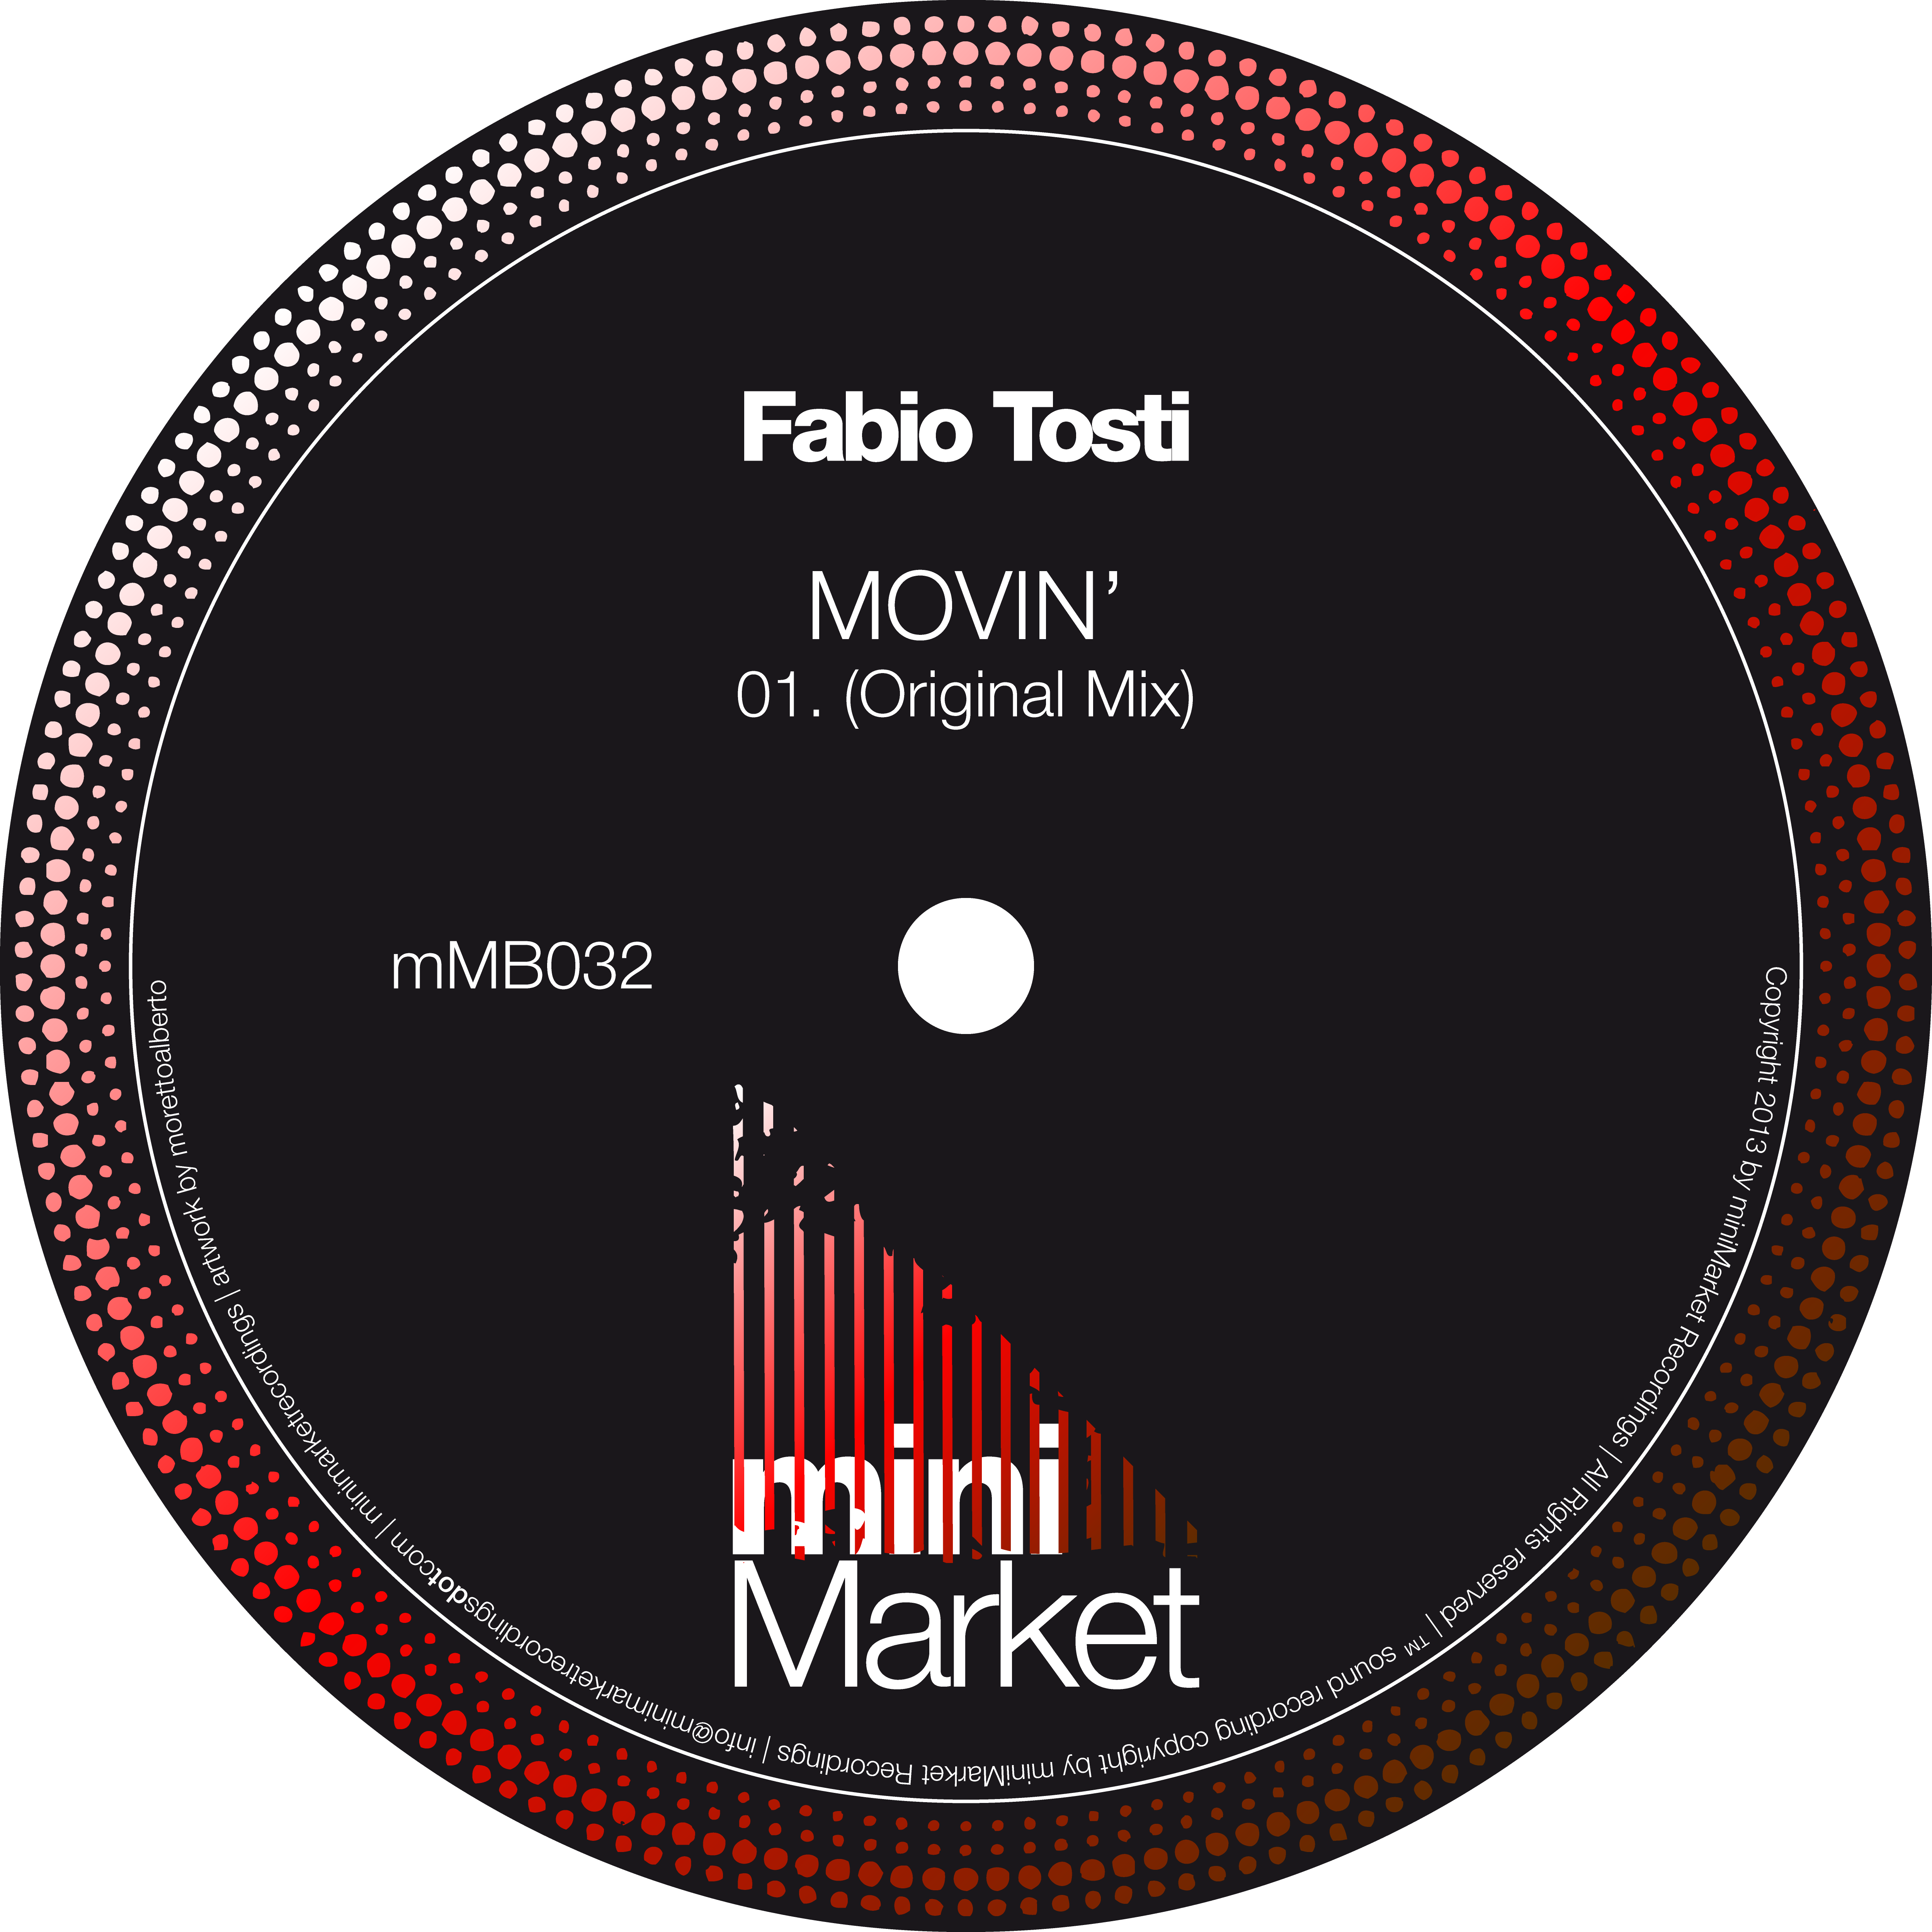 Fabio Tosti (Movin)